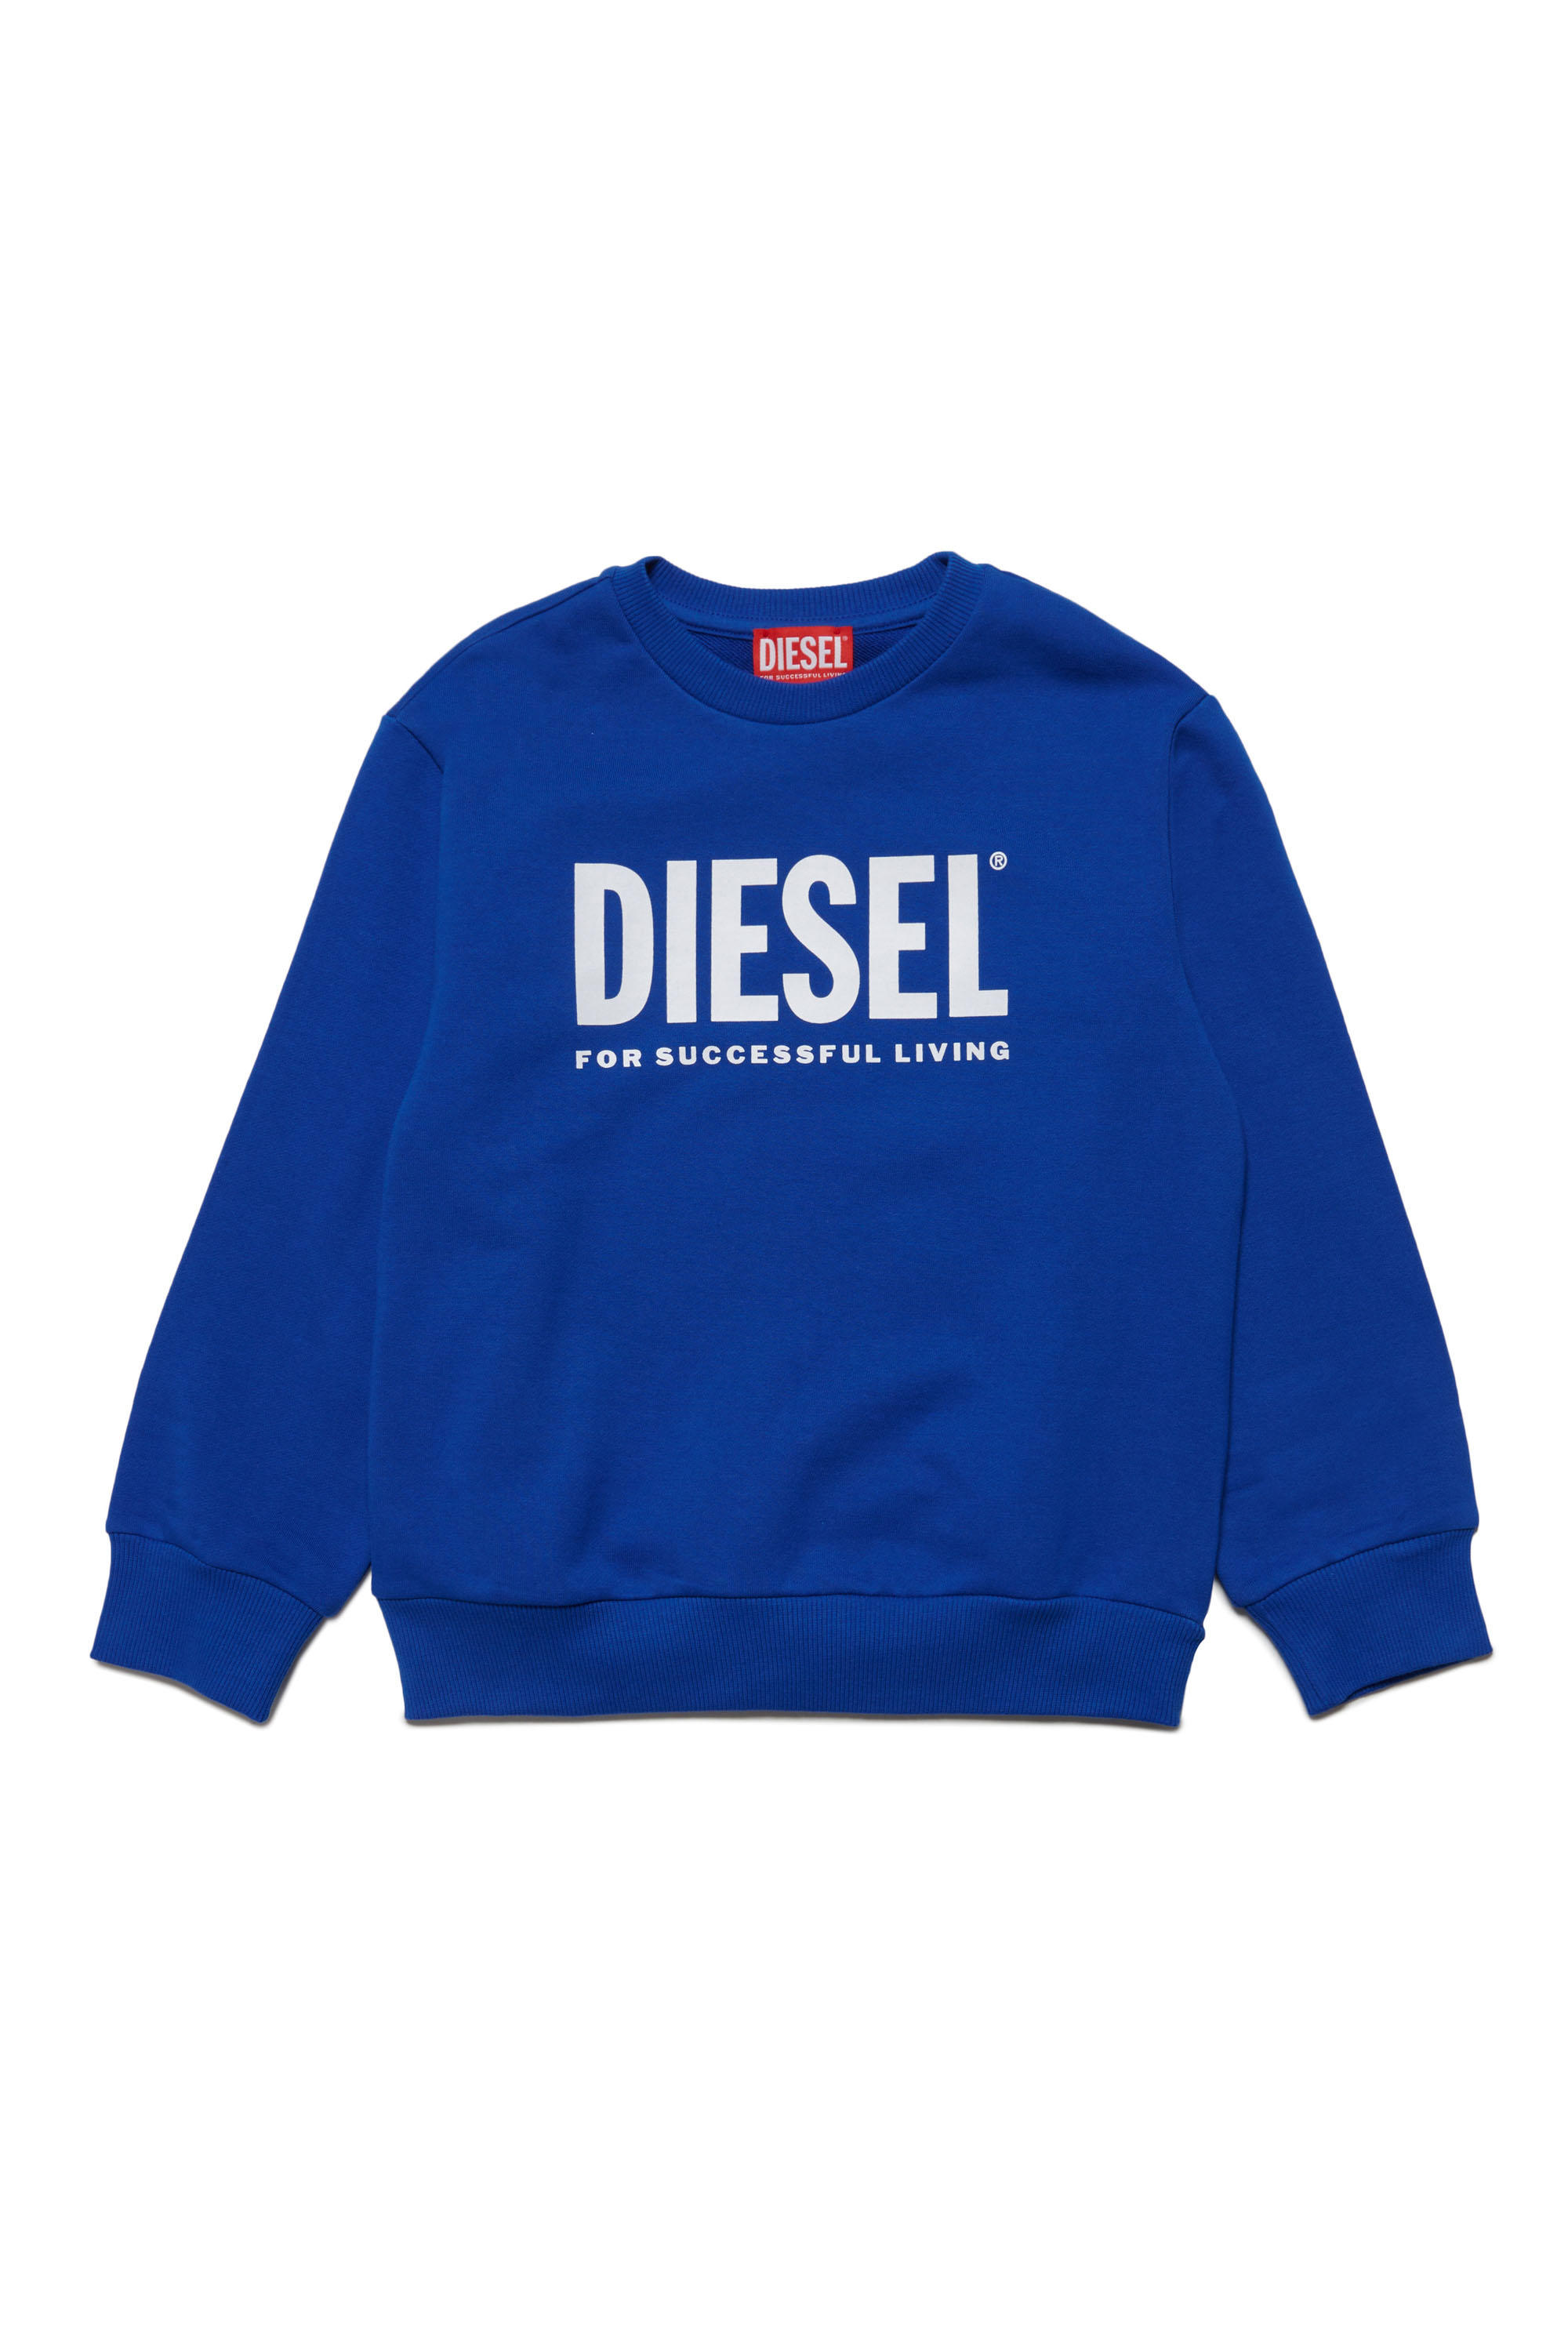 Diesel - LSFORT DI OVER, Blue - Image 1